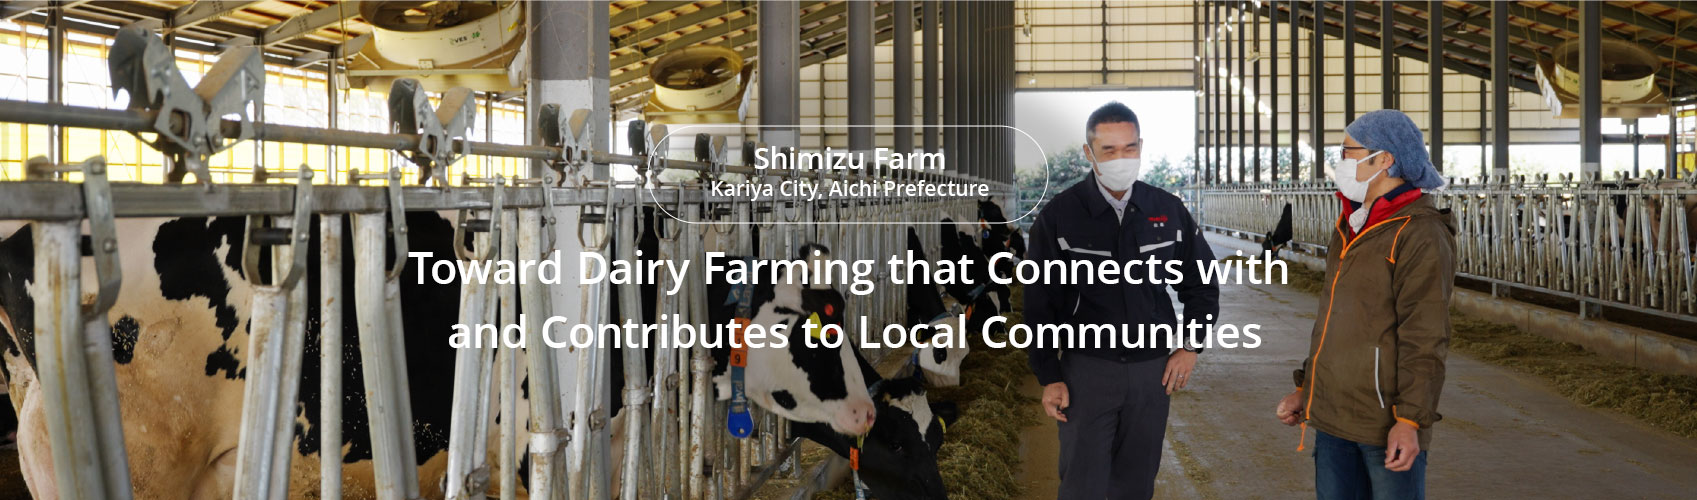 CASE4 Shimizu Farm (Kariya-shi, Aichi Prefecture) Toward Dairy Farming that Connects with and Contributes to Local Communities